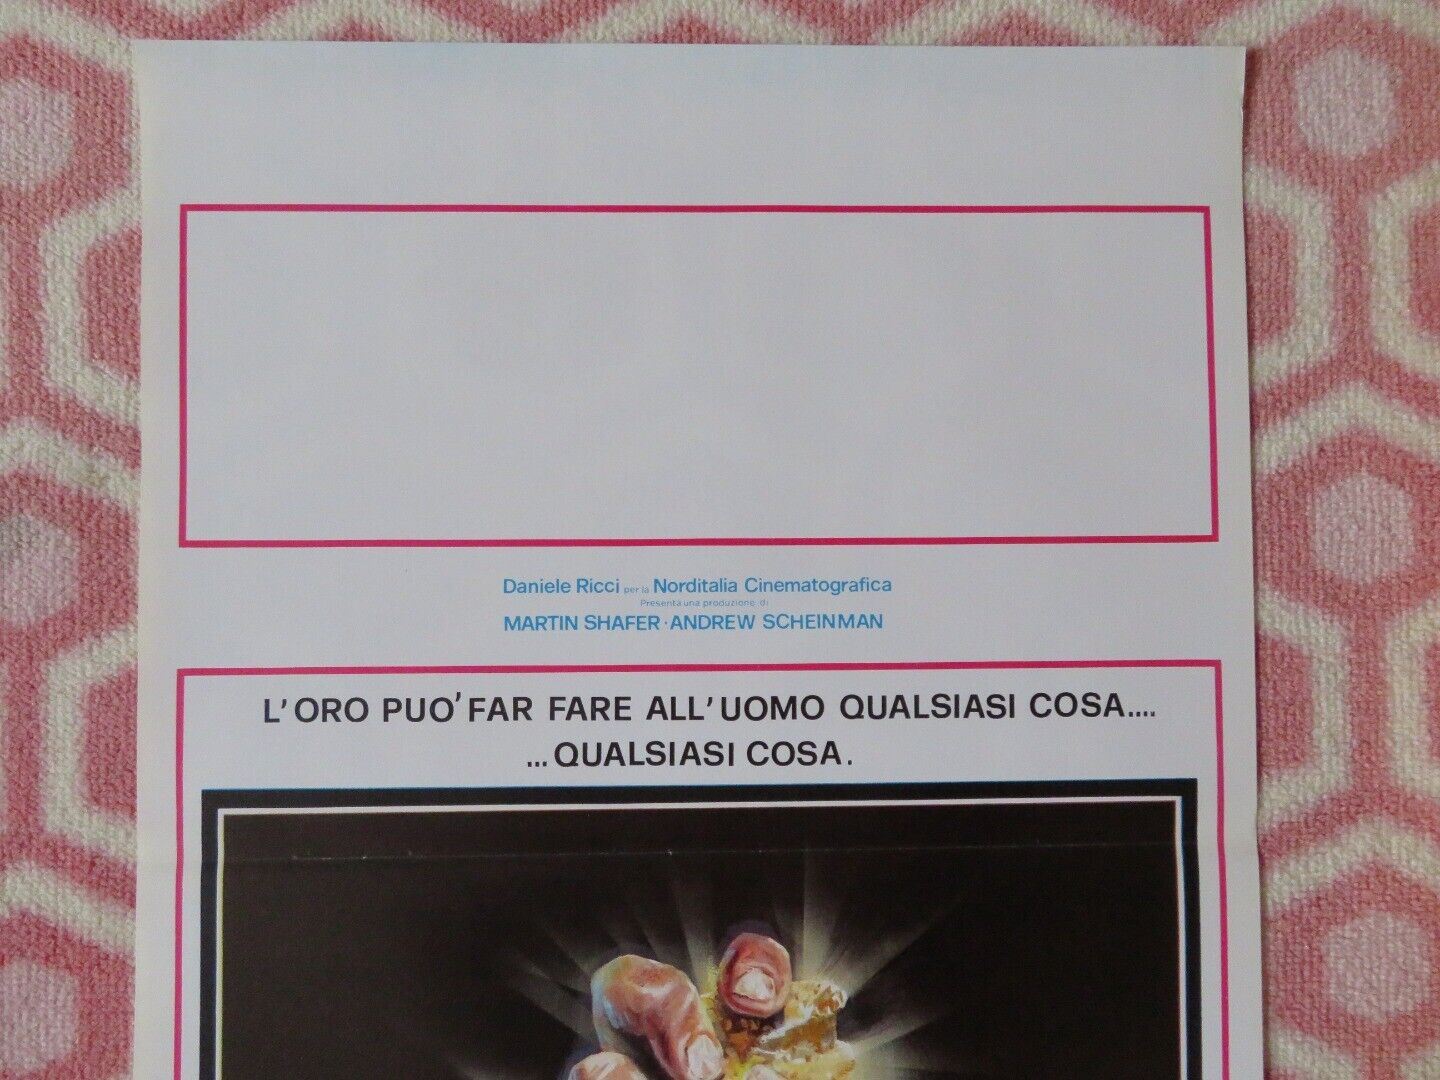 I PREDATORI DELLA VENA D'ORO ITALIAN LOCANDINA (28.5"x13") POSTER K BASINGER '84